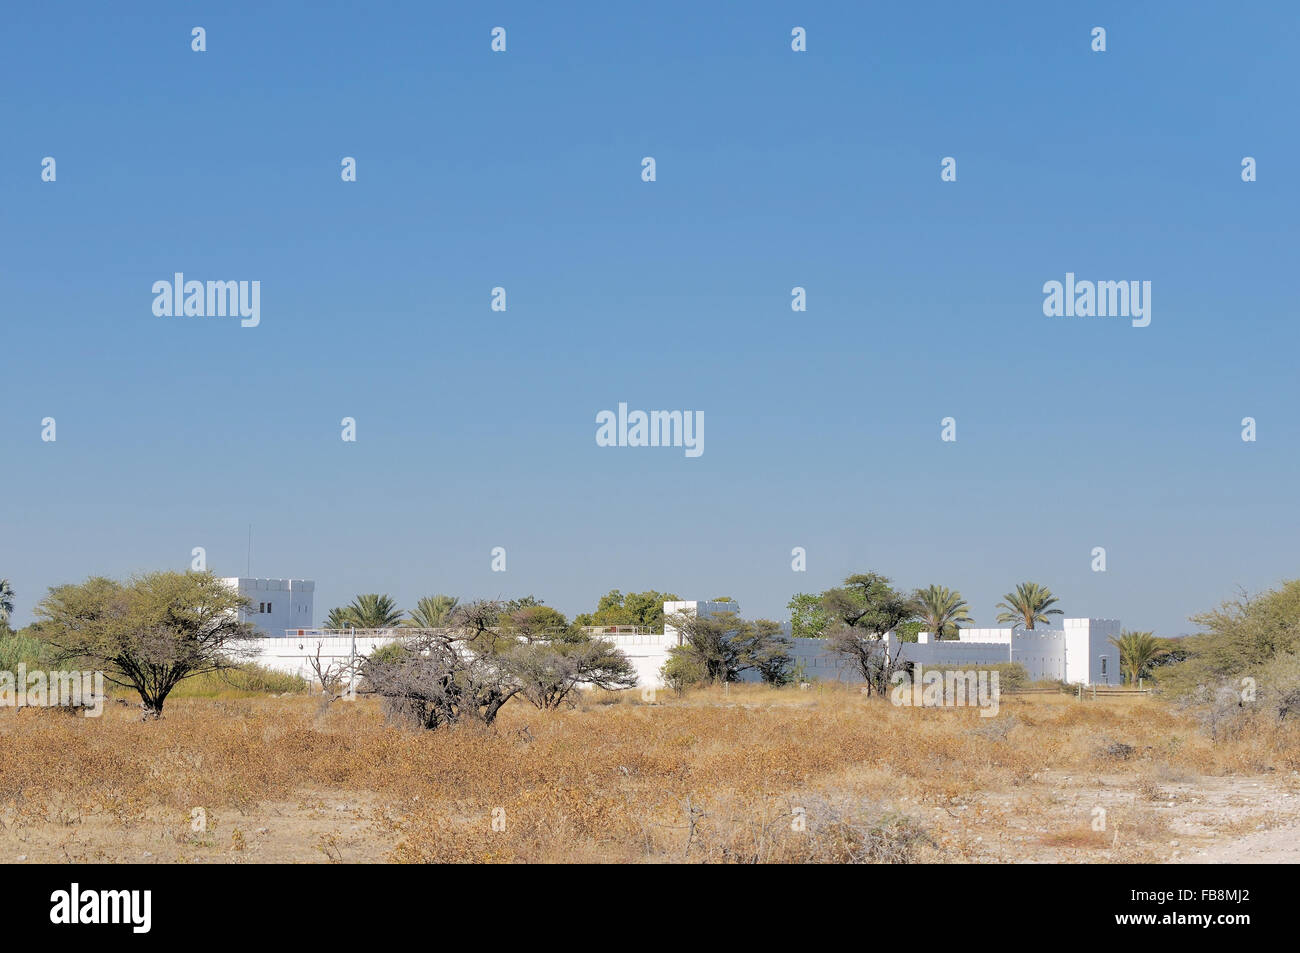 Fort Namutoni, a rest camp in the Etosha National Park, Namibia Stock Photo